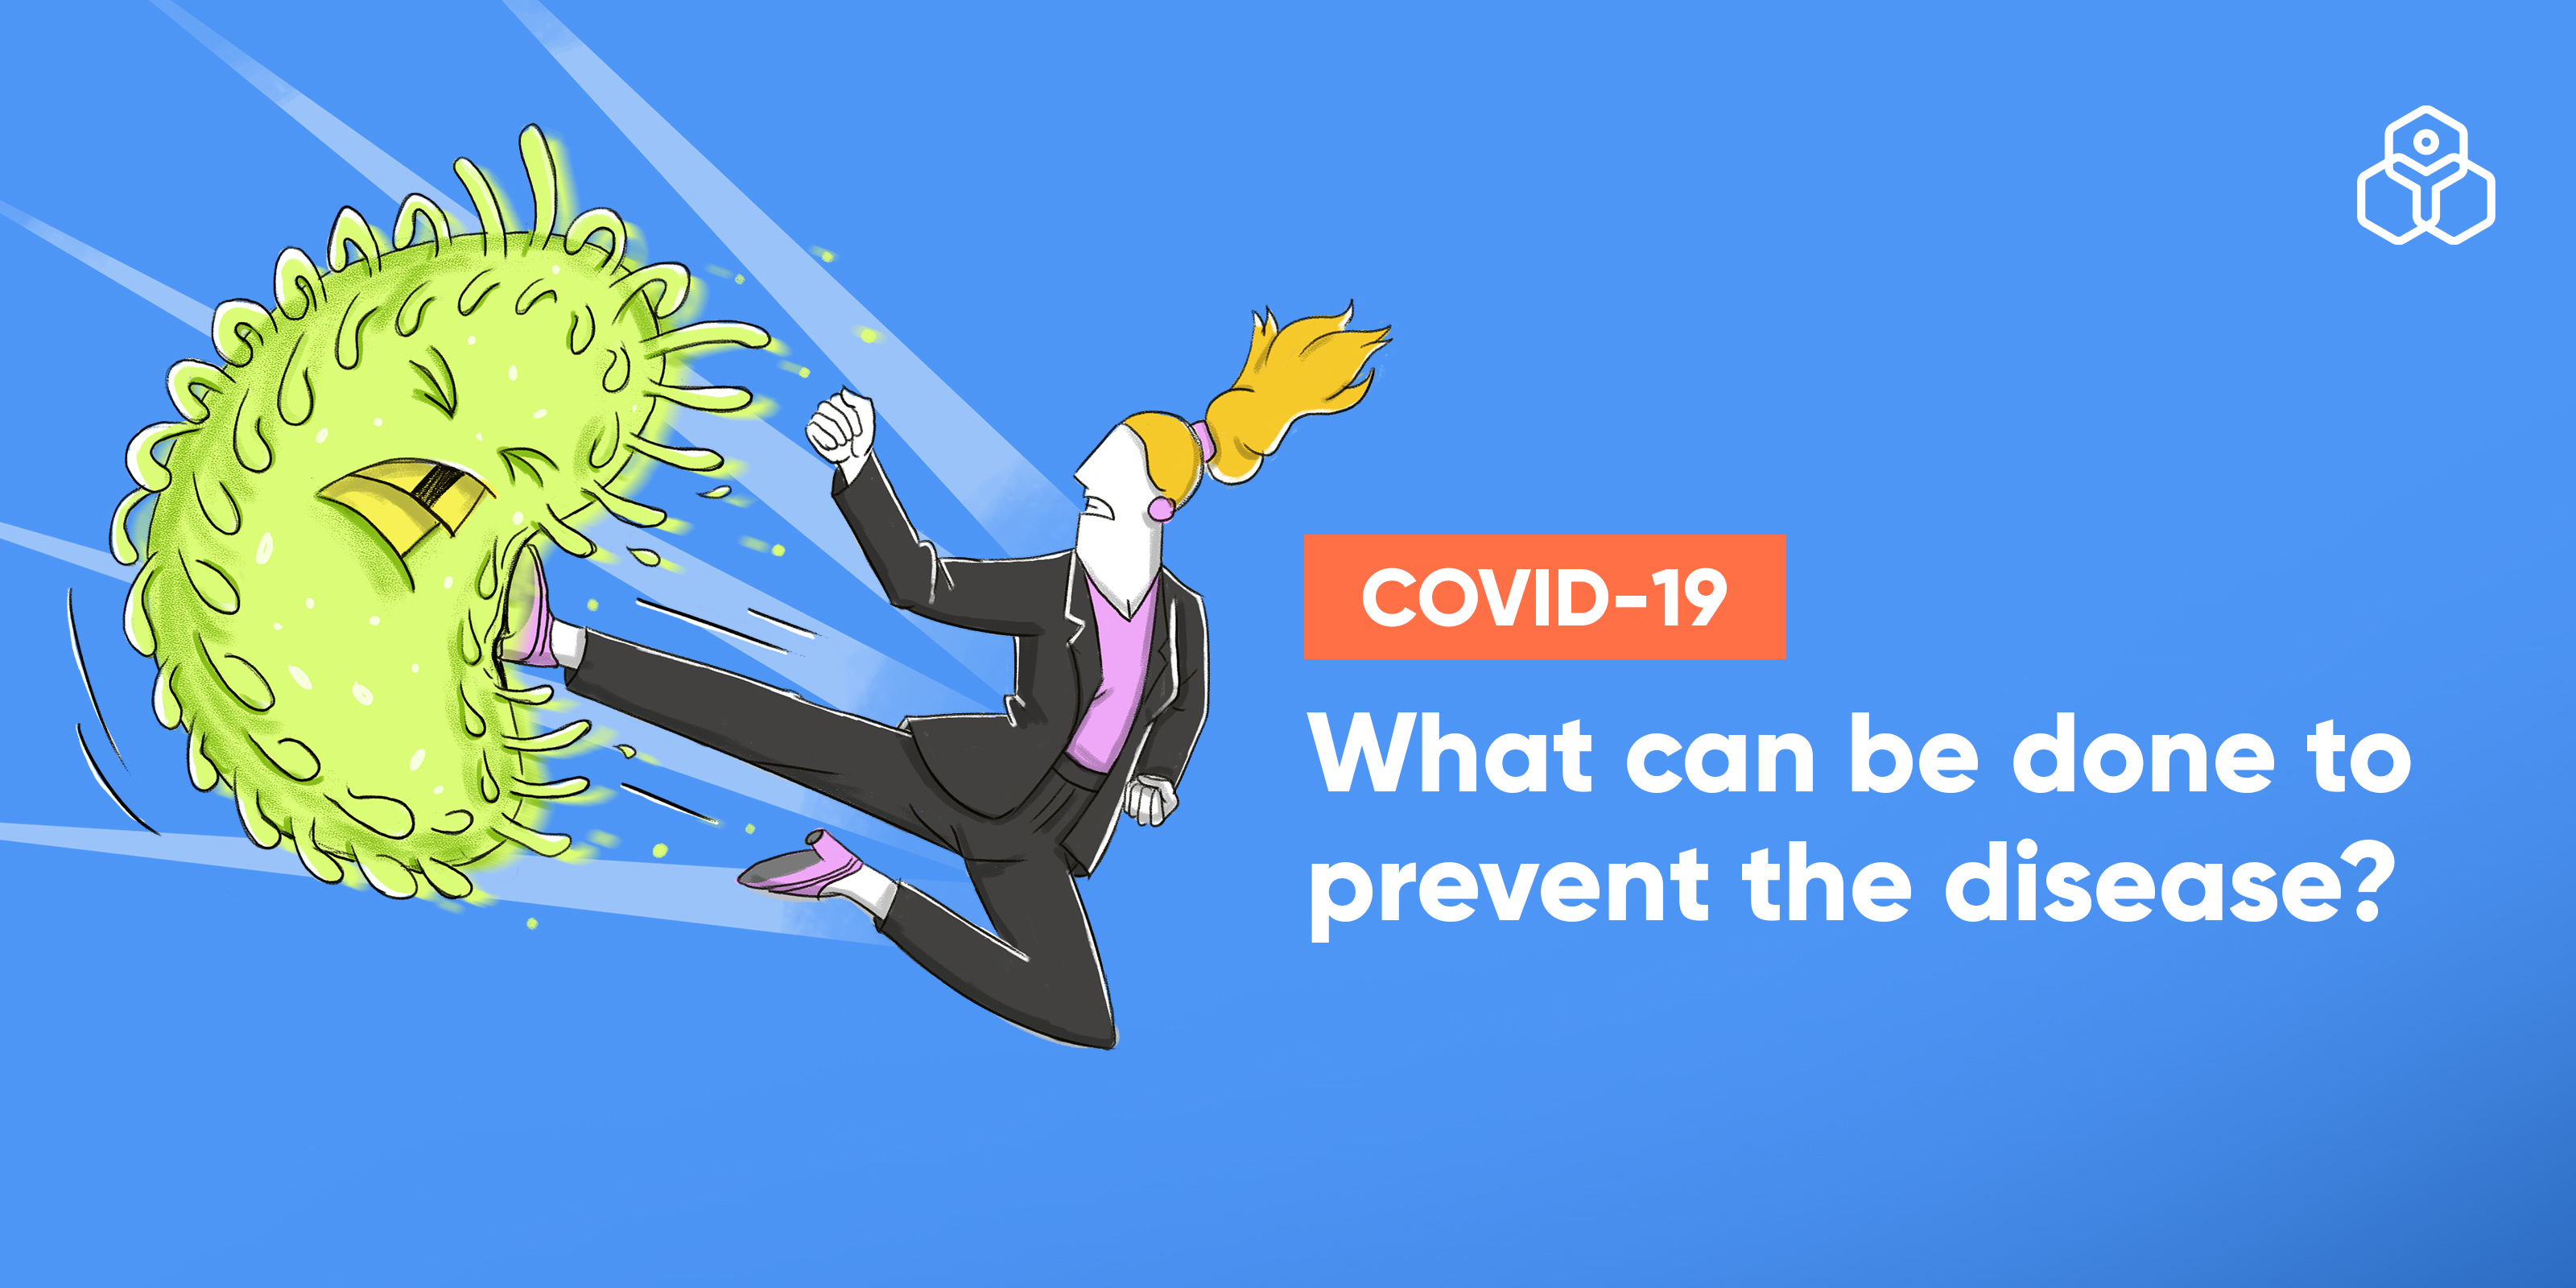 COVID-19: Preventive measures for your organization